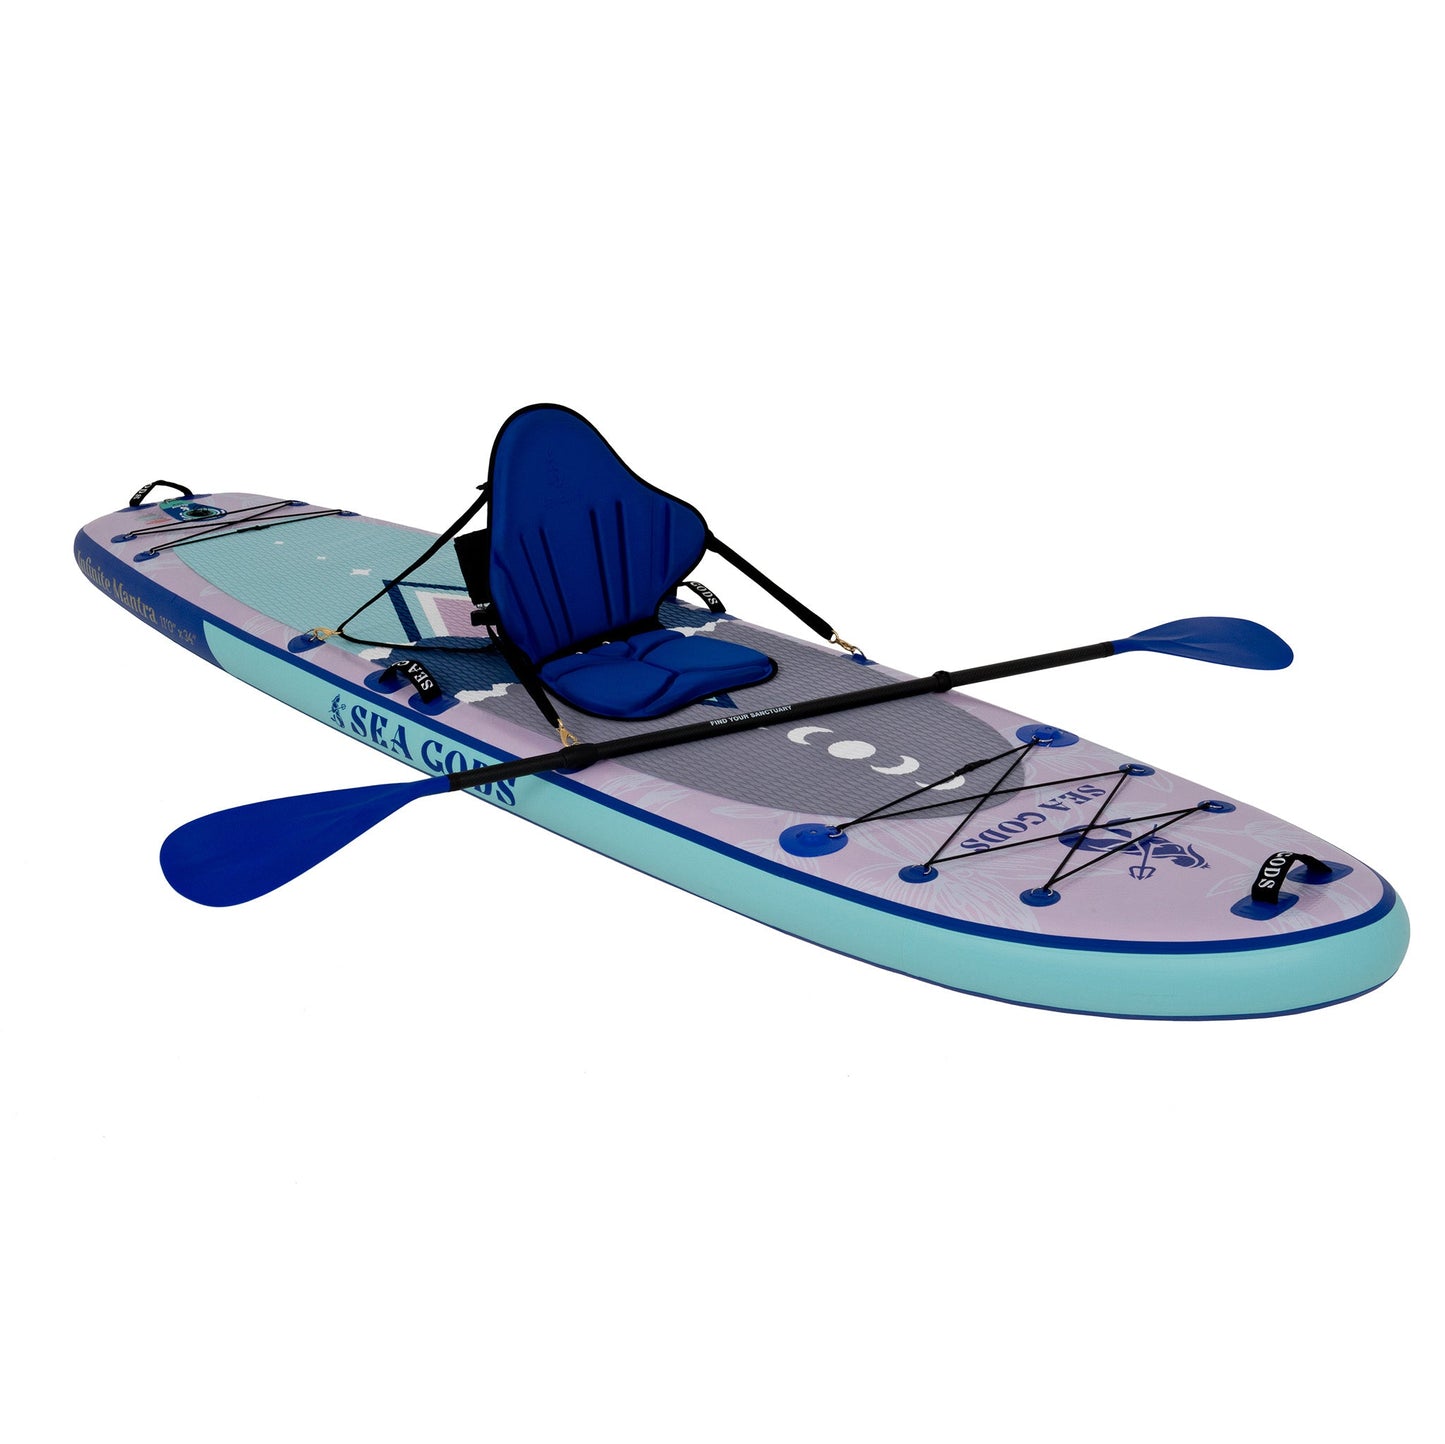 Yoga Paddle Board  Infinite Mantra Yoga iSUP by SeaGods USA – Sea Gods USA